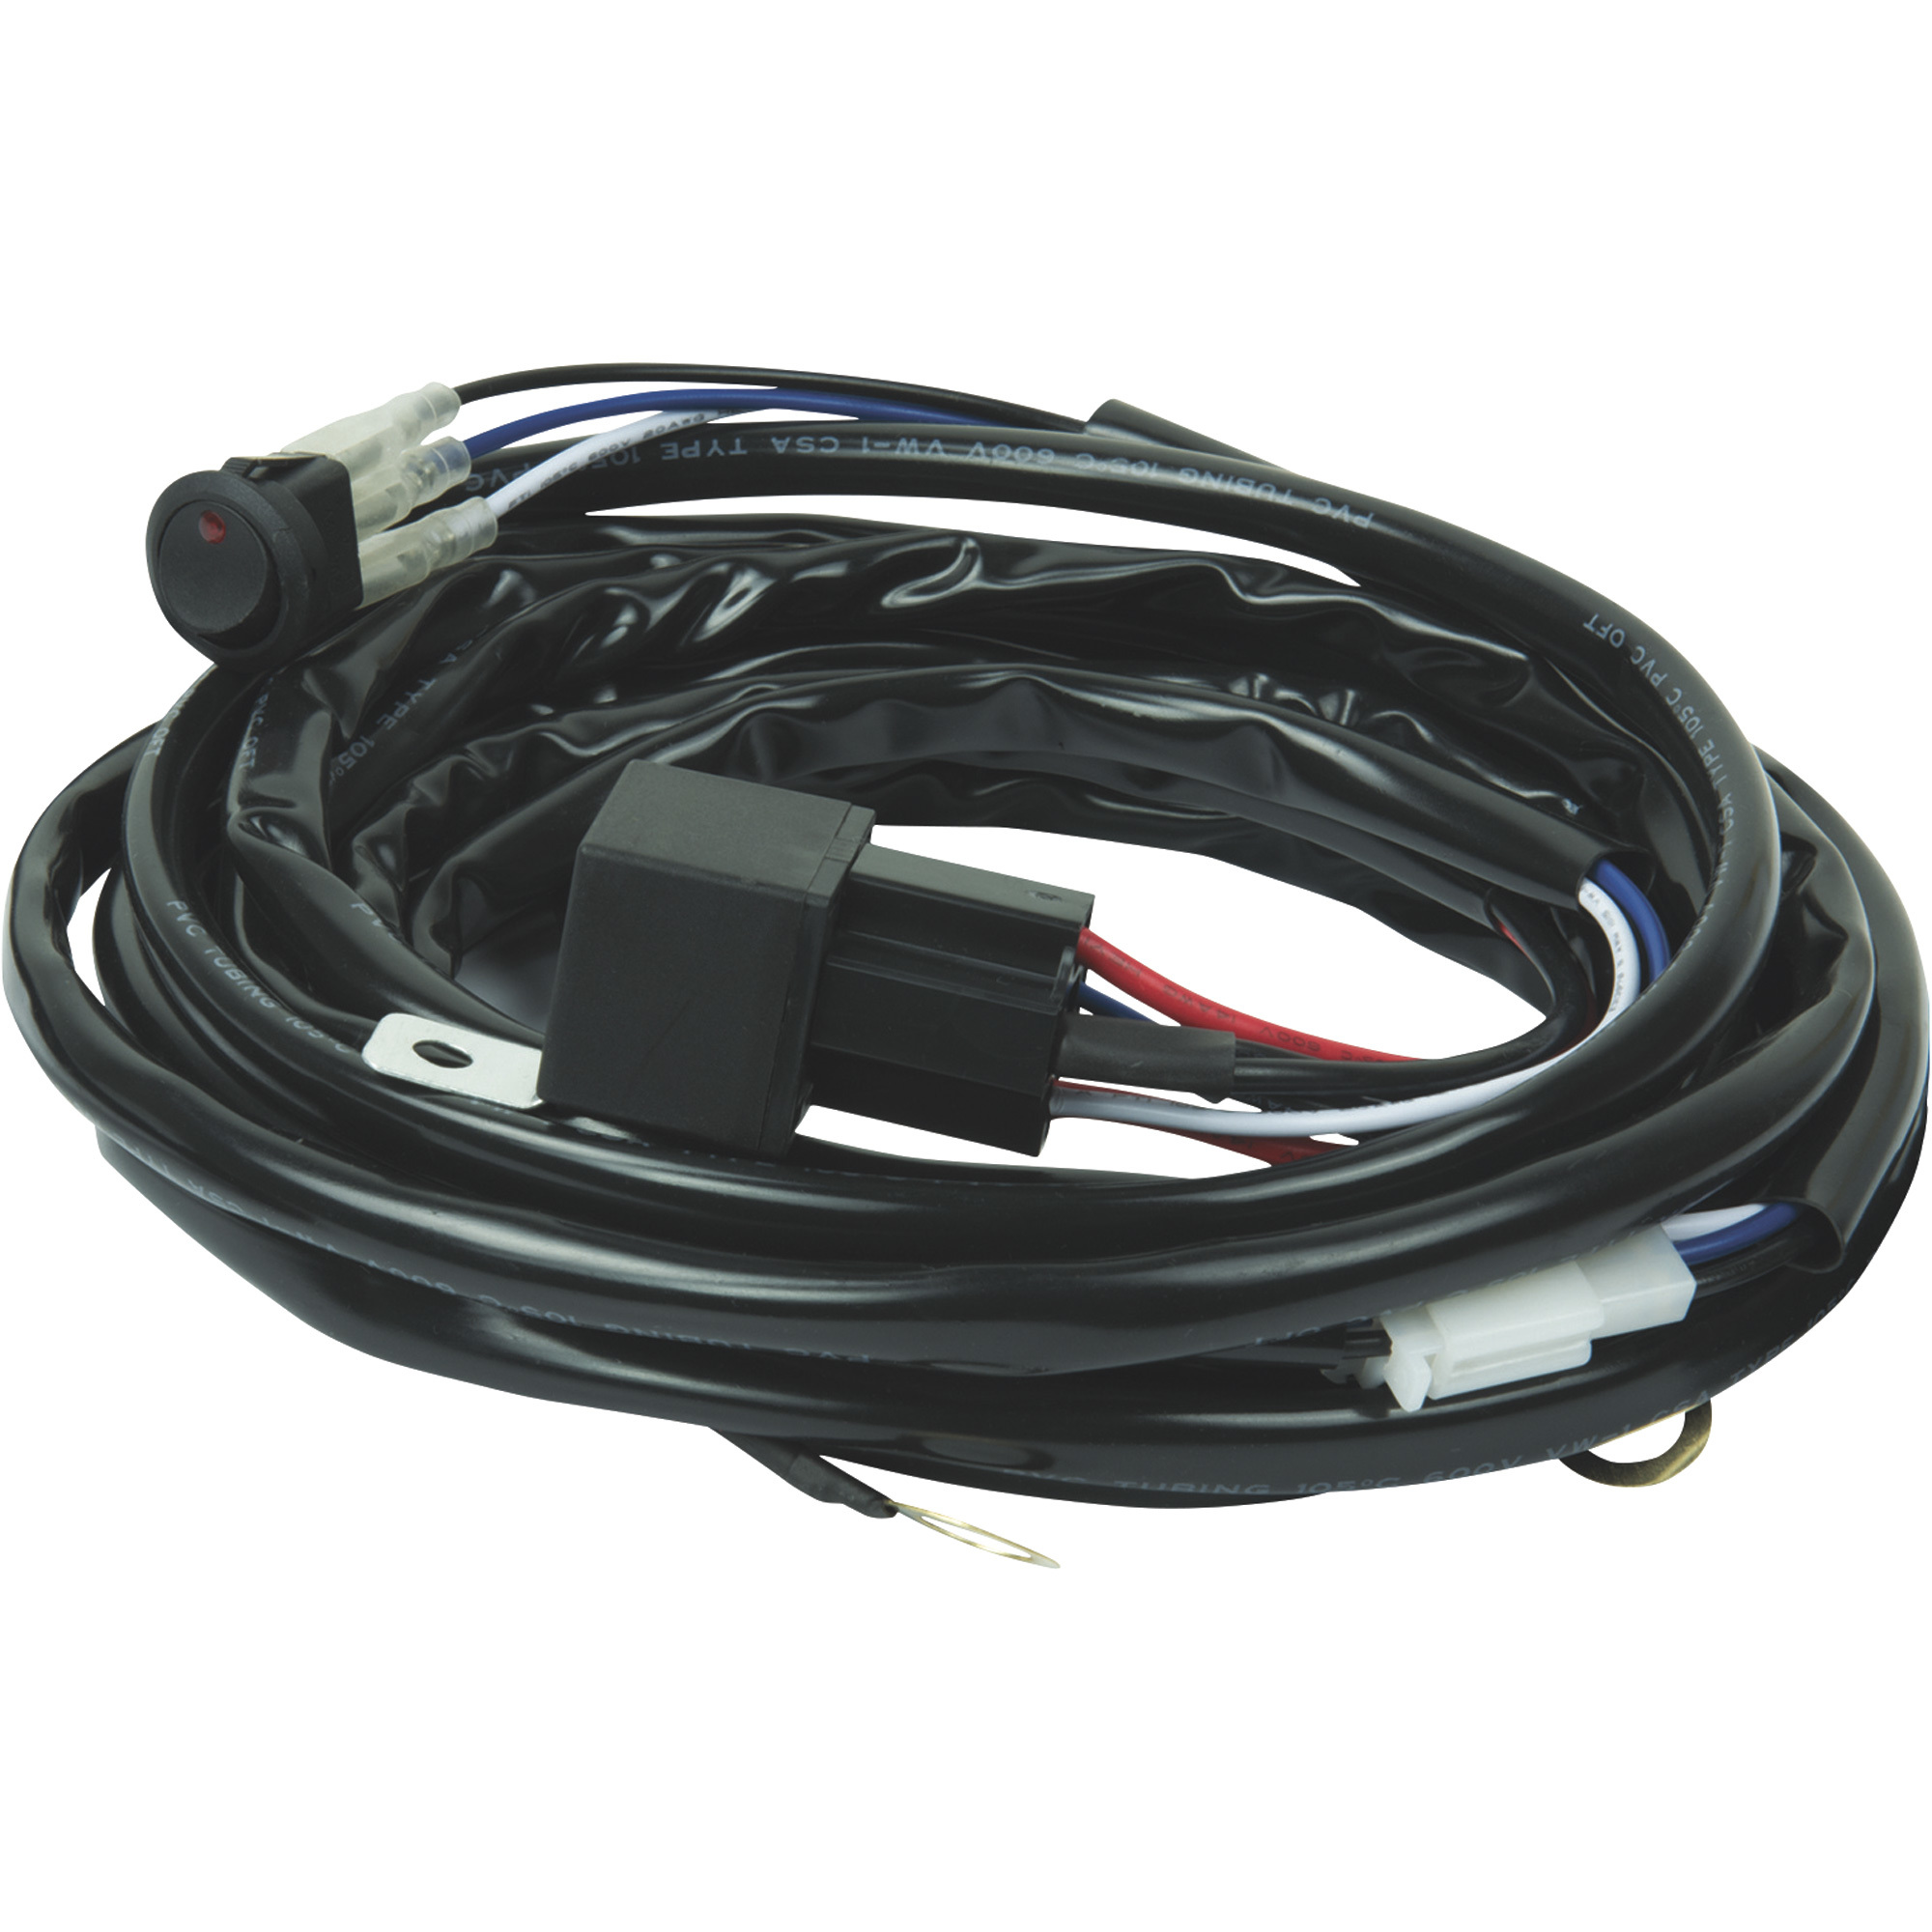 Blazer Quick-Connect Wire Harness â Single Light System, Model CWL610